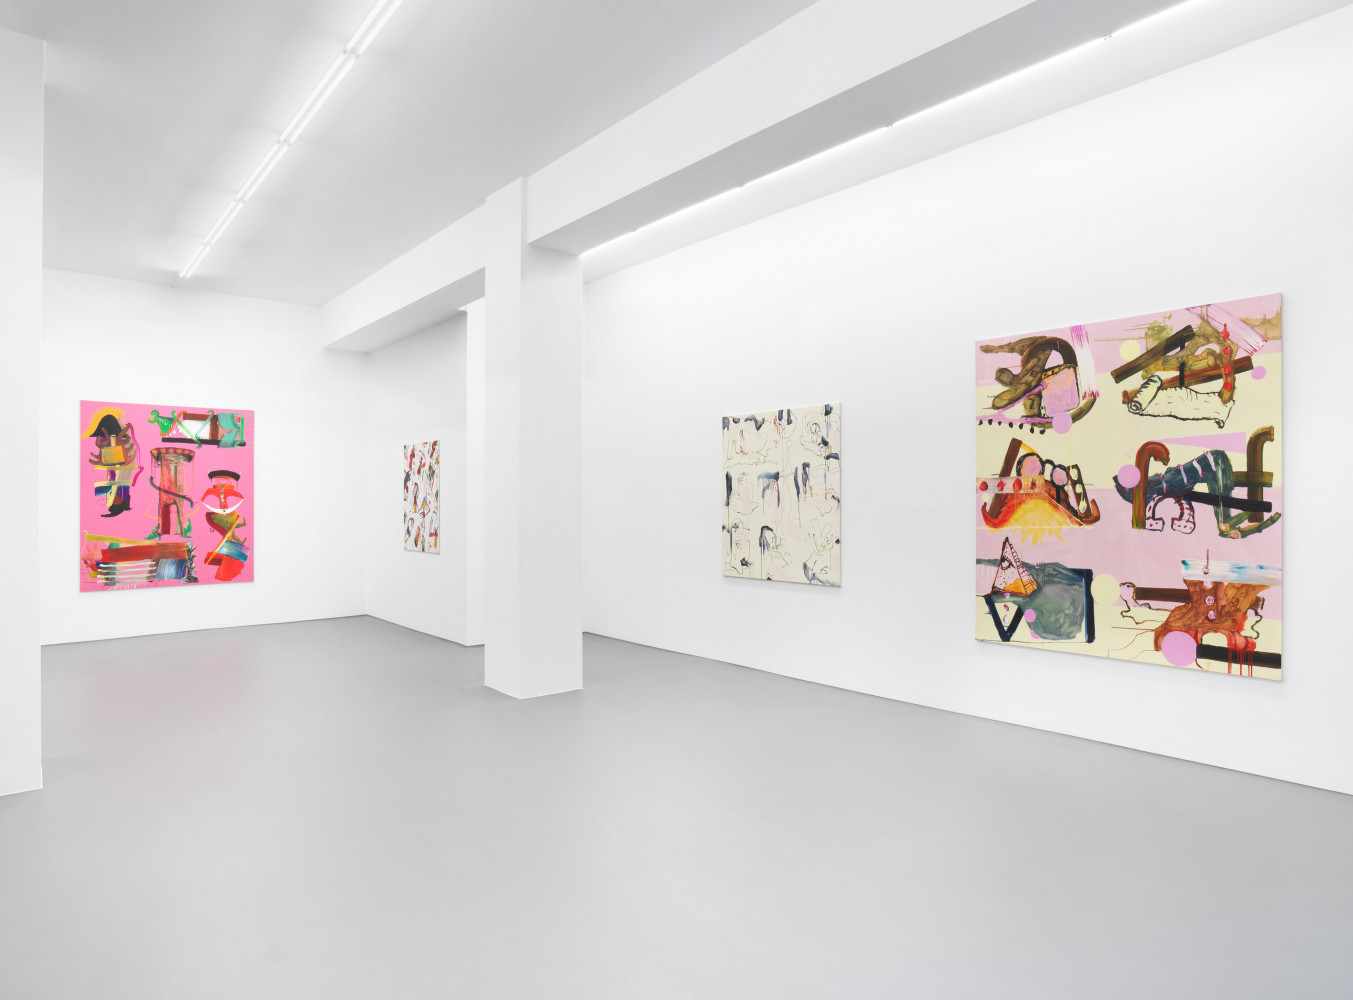 Fiona Rae, ‘Fiona Rae - Row Paintings’, Installation view, Buchmann Galerie, 2021